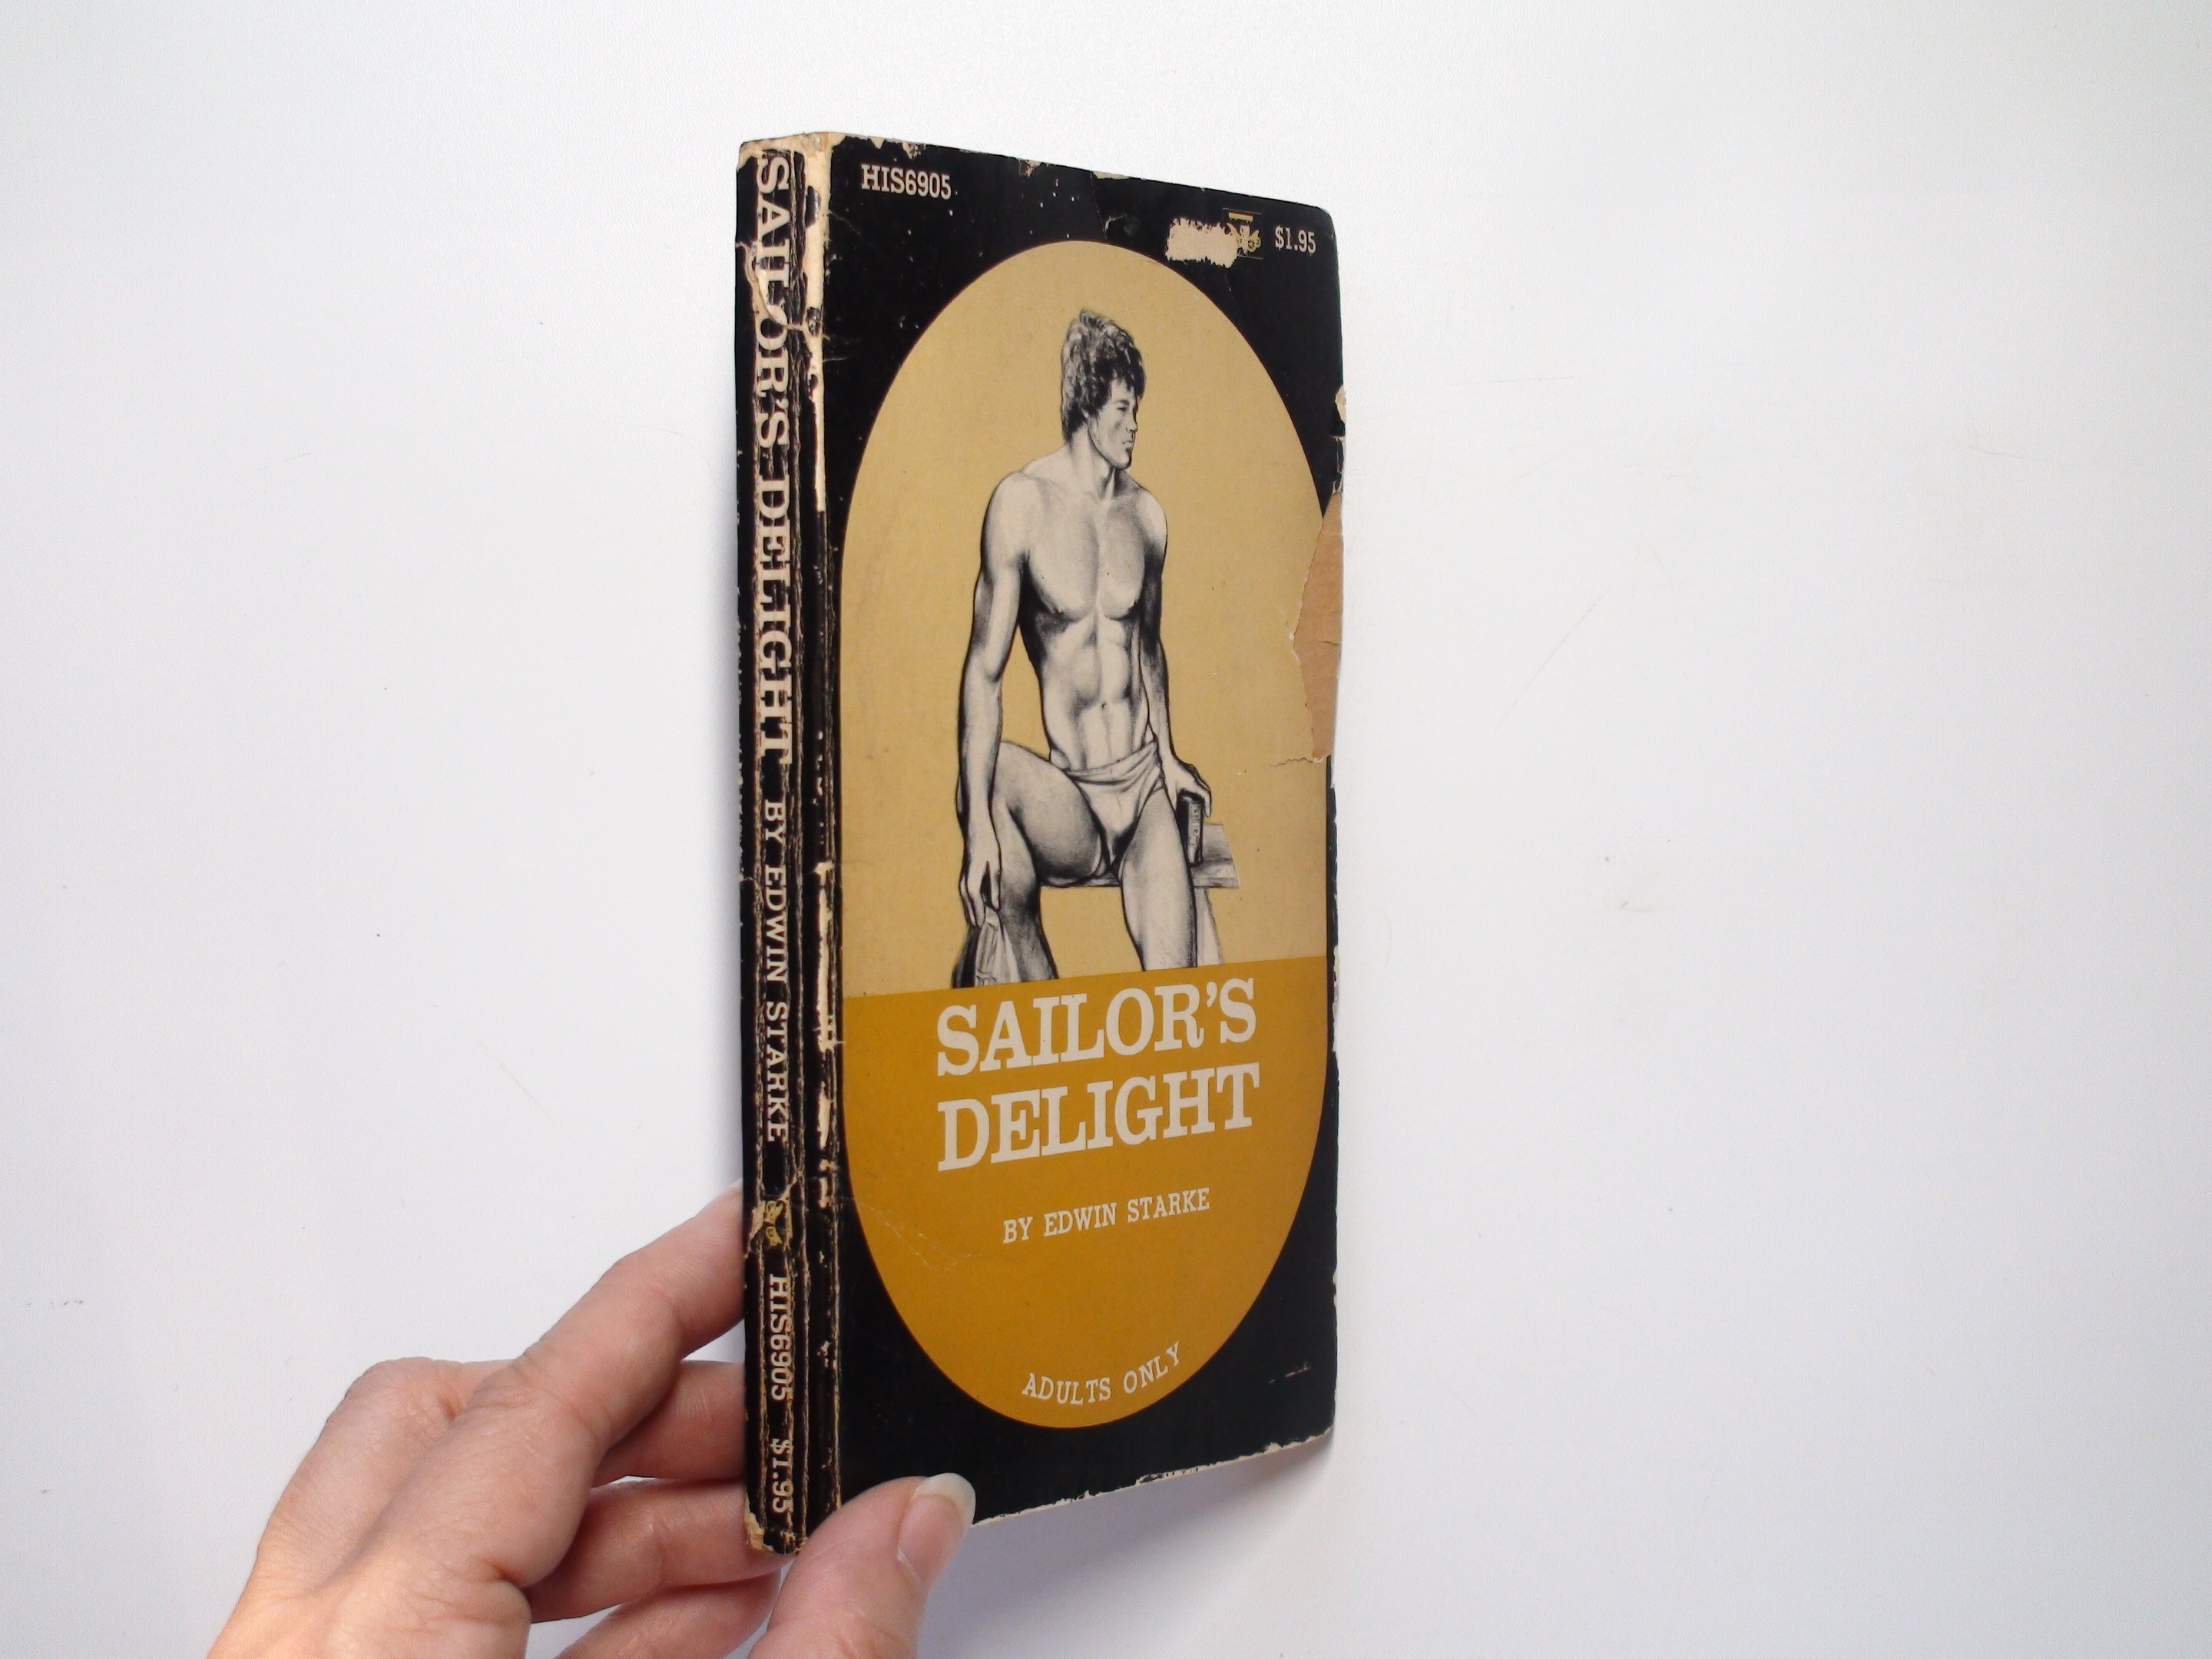 Sailor's Delight, by Edwin Starke, Adult Gay Erotica, Vintage Paperback, 1971